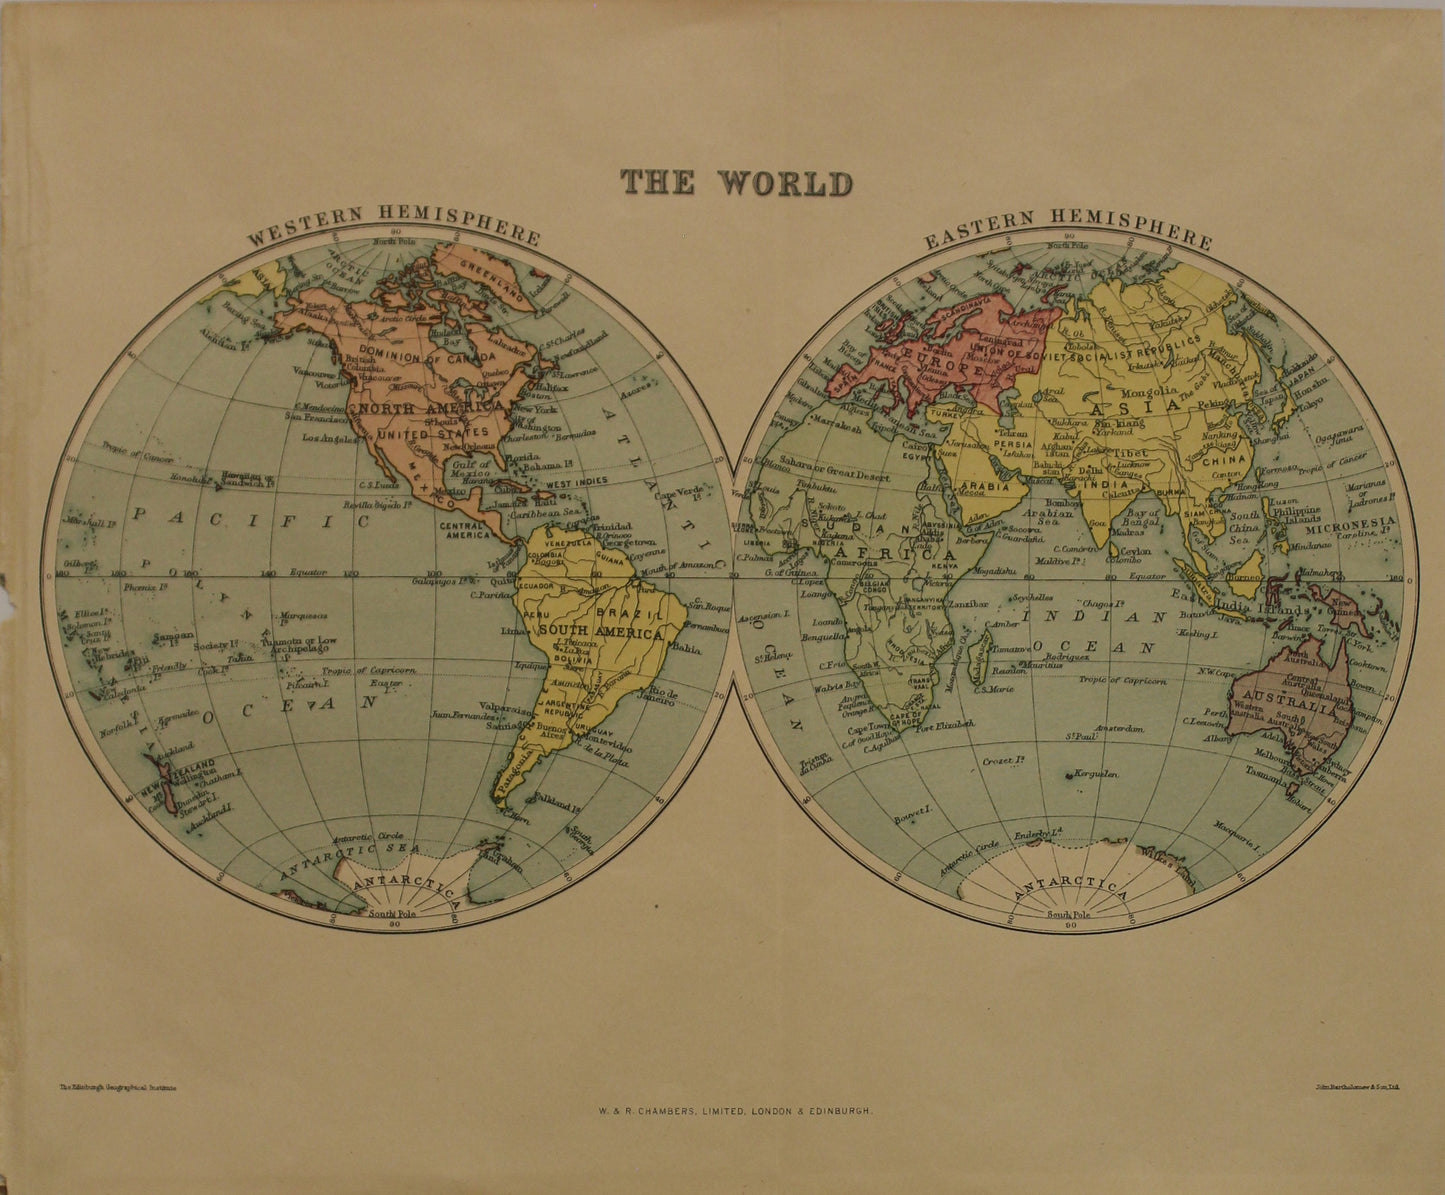 Map, The World, Eastern and Western Hemispheres, The Edinburgh Geographical Institute, John Bartholomew and Sons Ltd,  W & R Chambers,